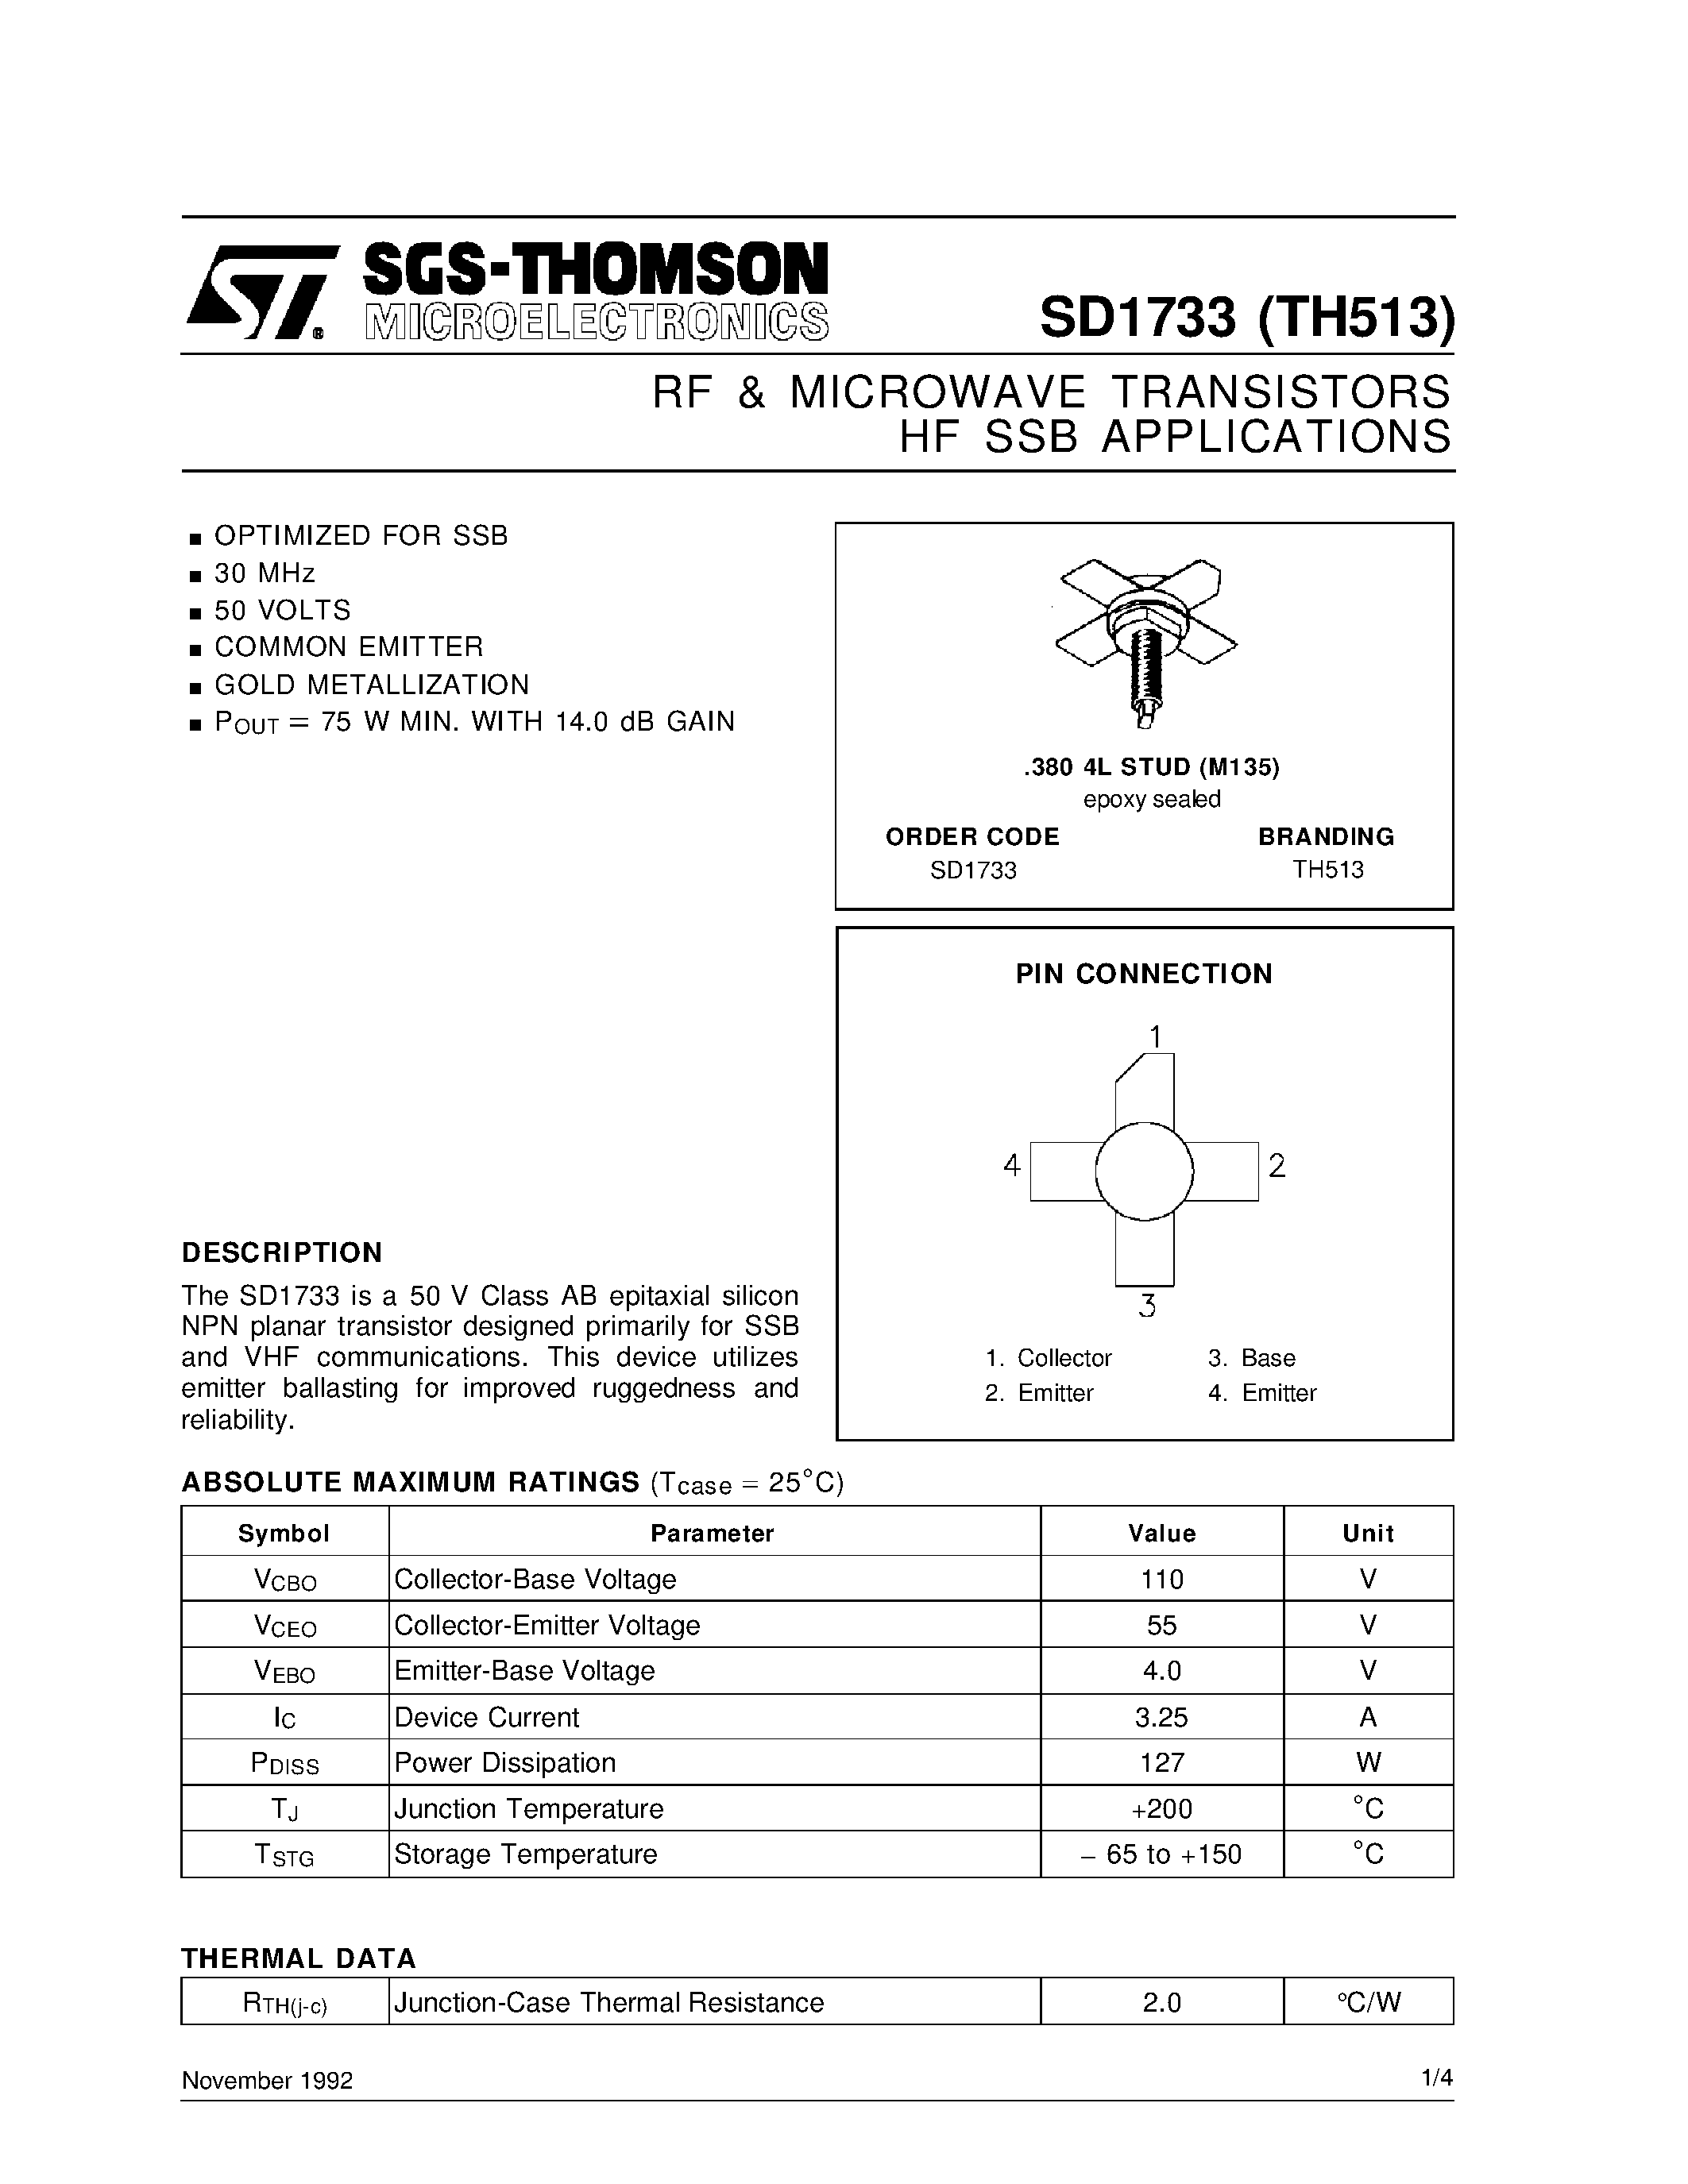 Datasheet SD1733 - RF & MICROWAVE TRANSISTORS HF SSB APPLICATIONS page 1